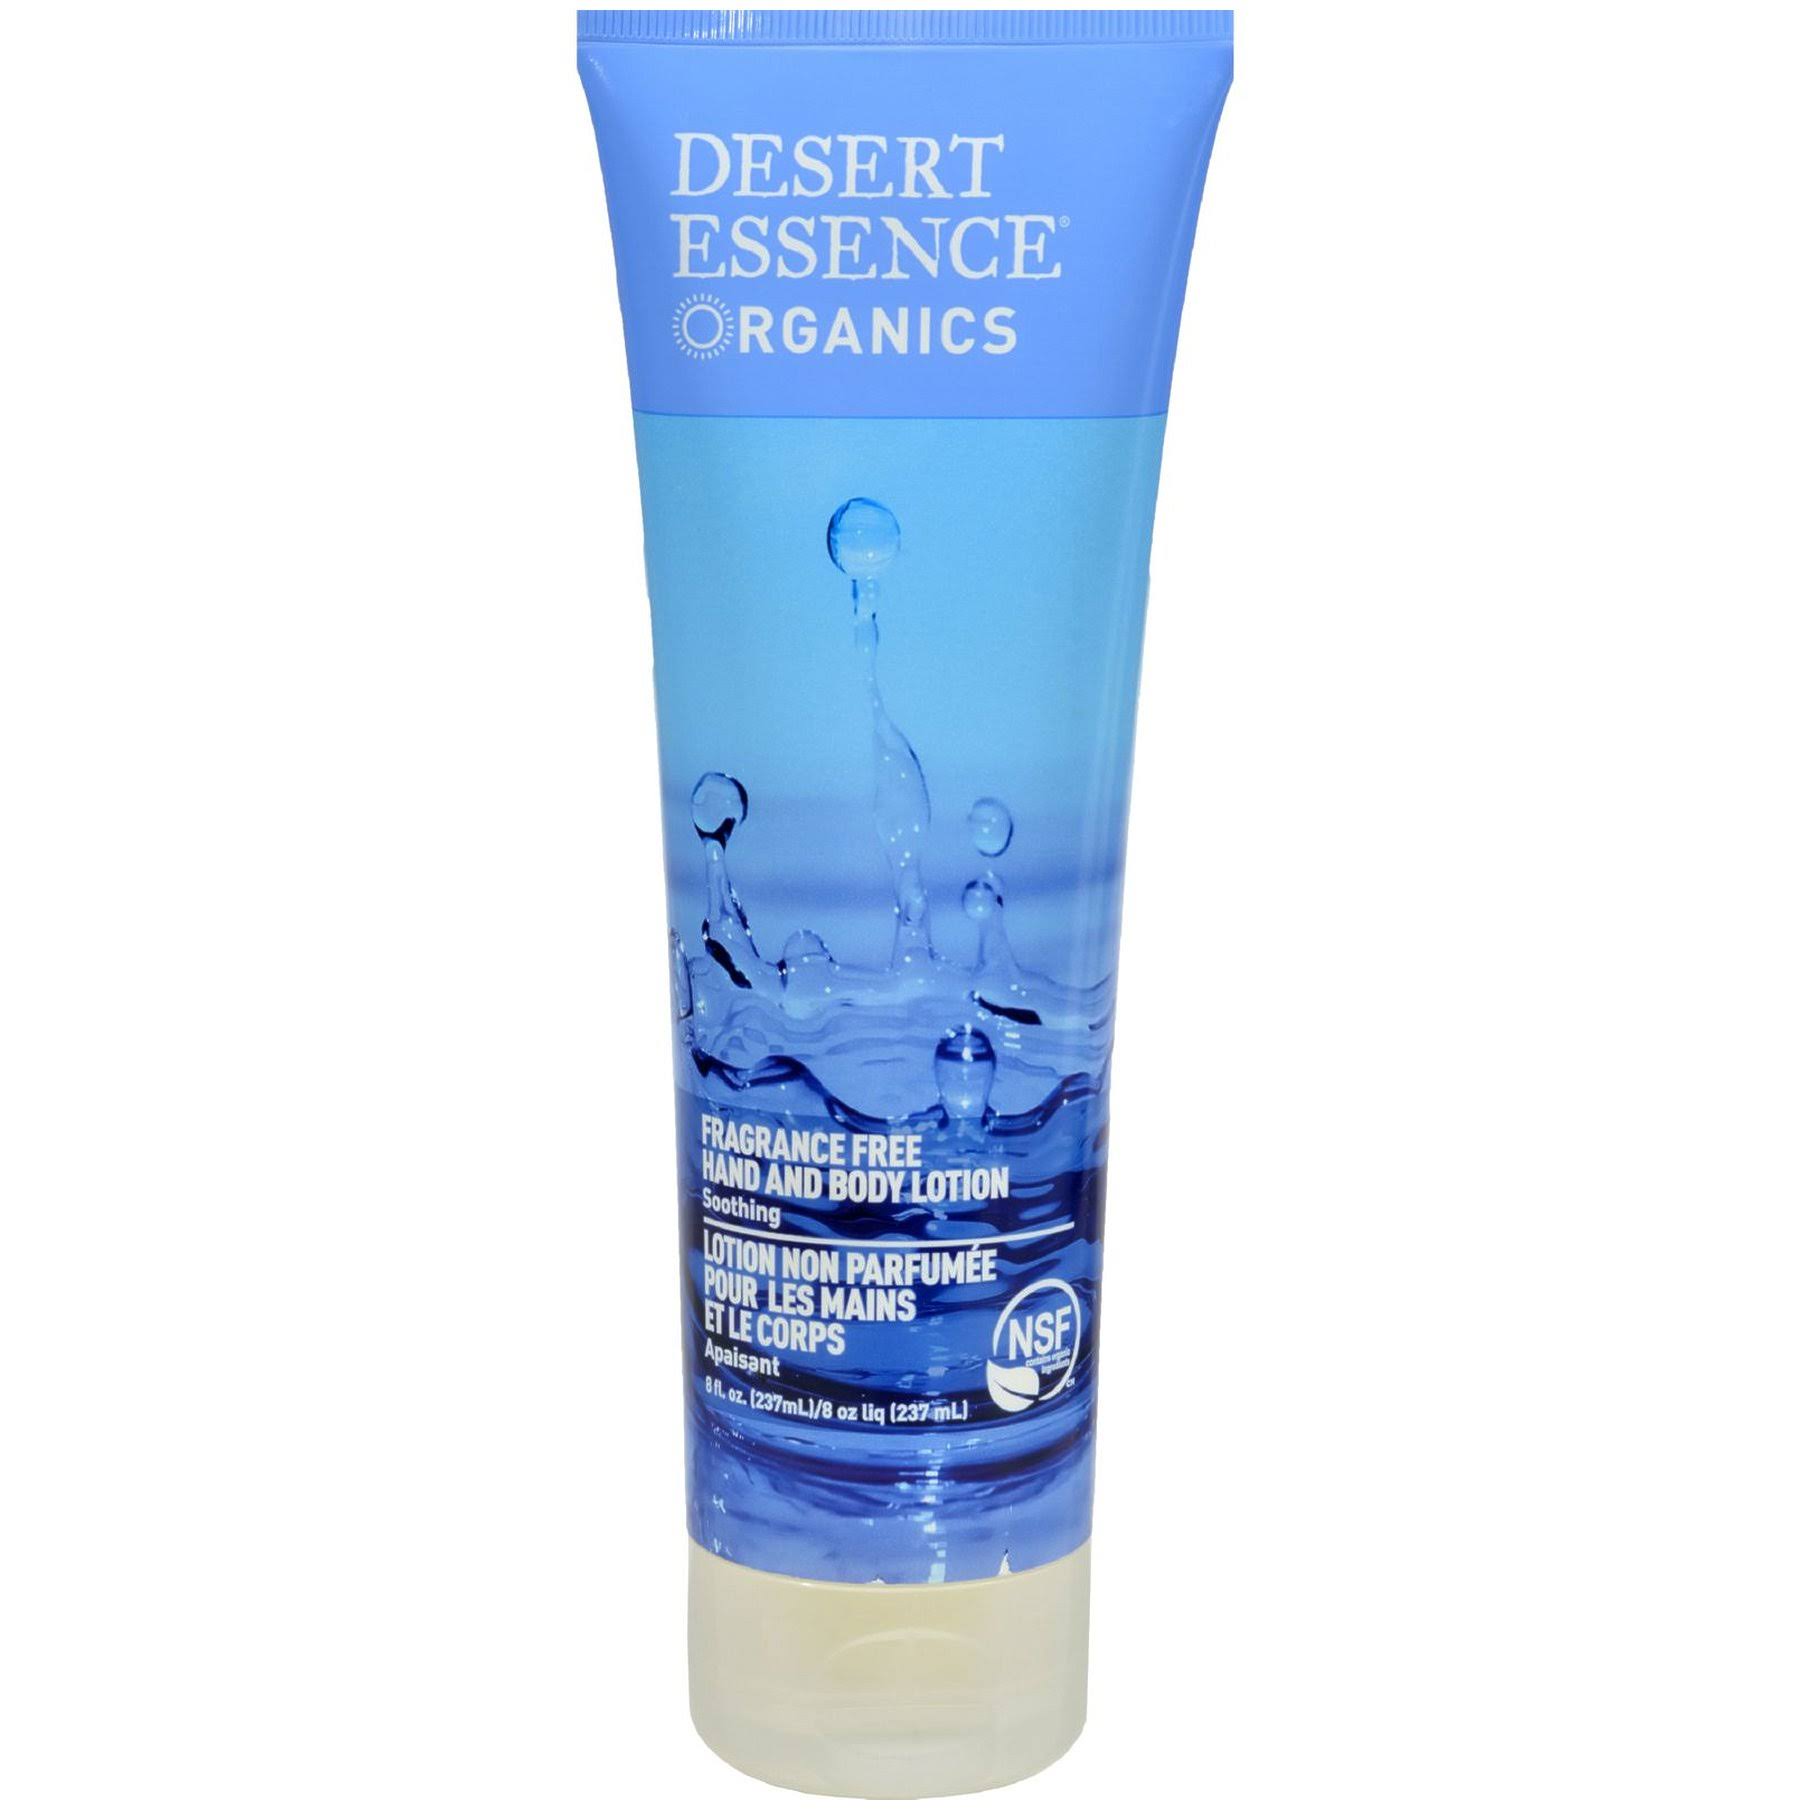 Desert Essence Organics Hand And Body Lotion - 117ml